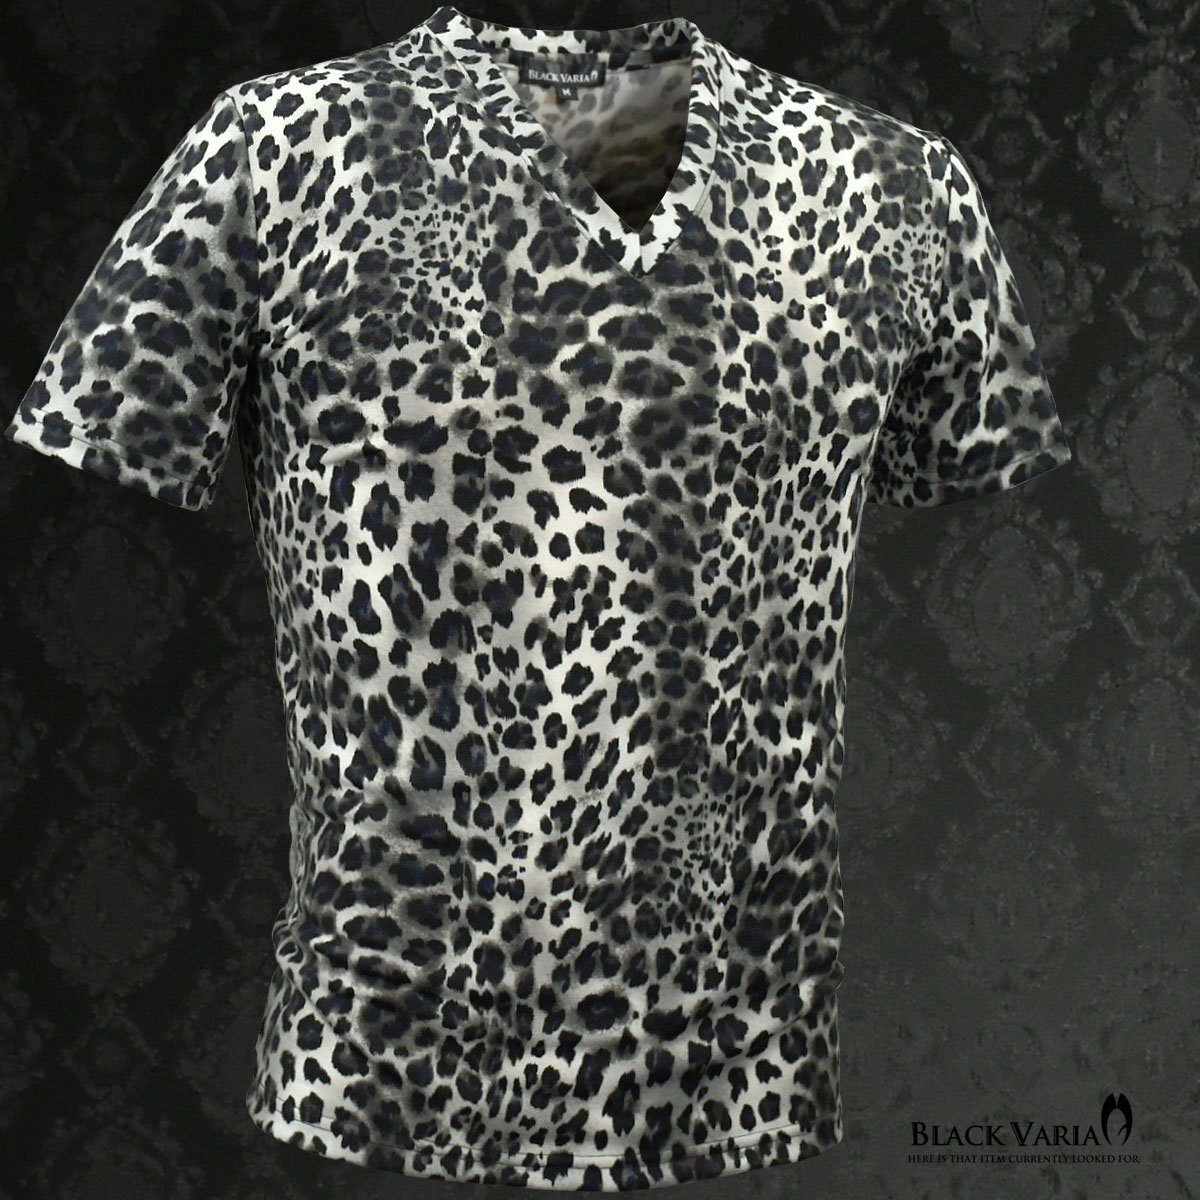 193802-gy ブラックバリア ヒョウ 豹 Vネック レオパード 日本製 スリム 半袖Tシャツ メンズ(ブラック黒グレー) 3L 総柄 アニマル 総柄_画像1